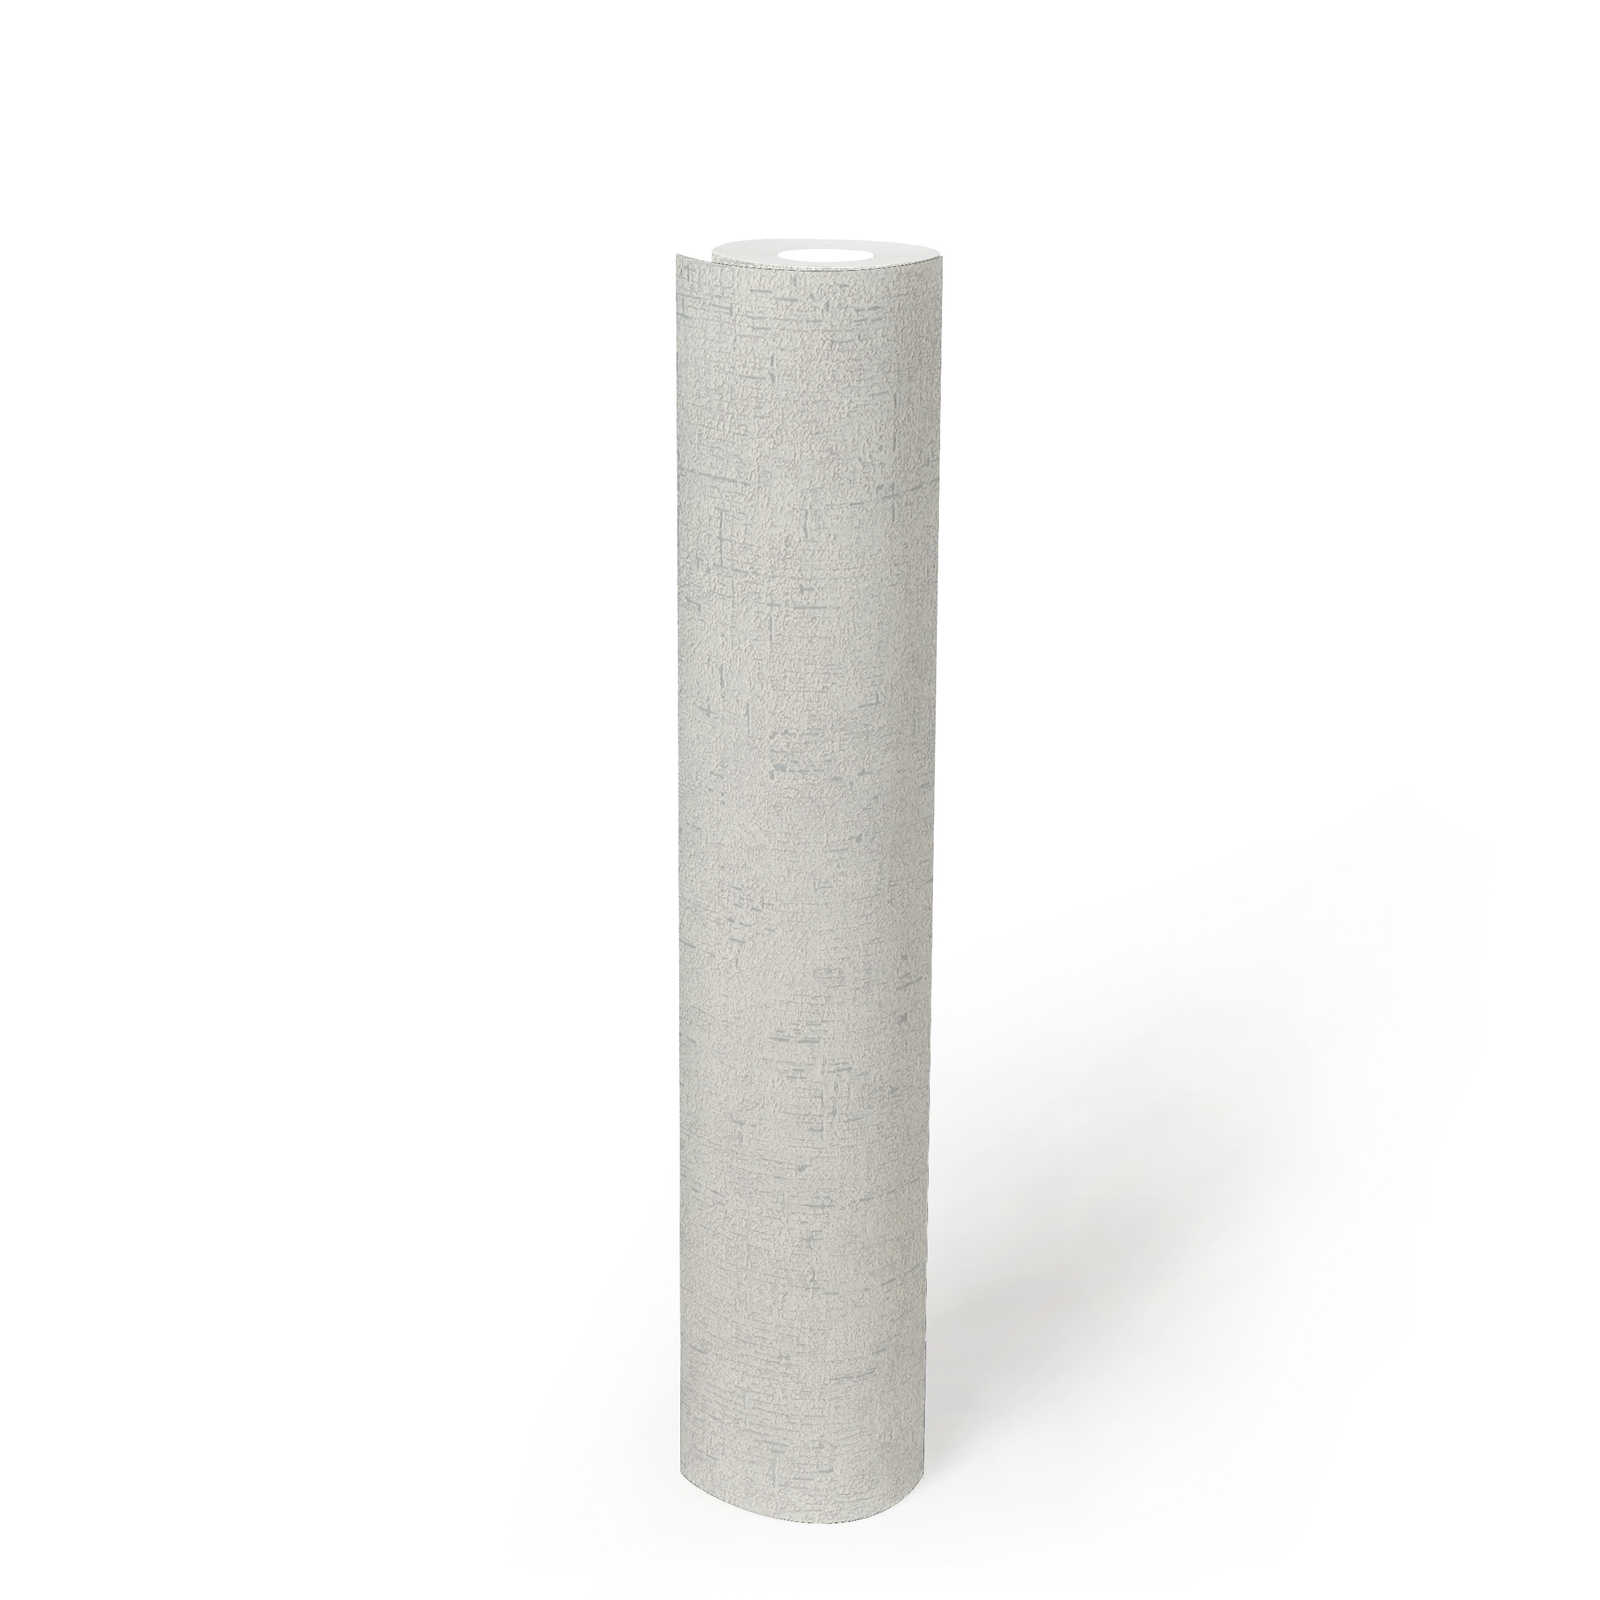             Grau-Weiße Vliestapete mit rustikalem Strukturdesign & Matt-Glanz-Effekt
        